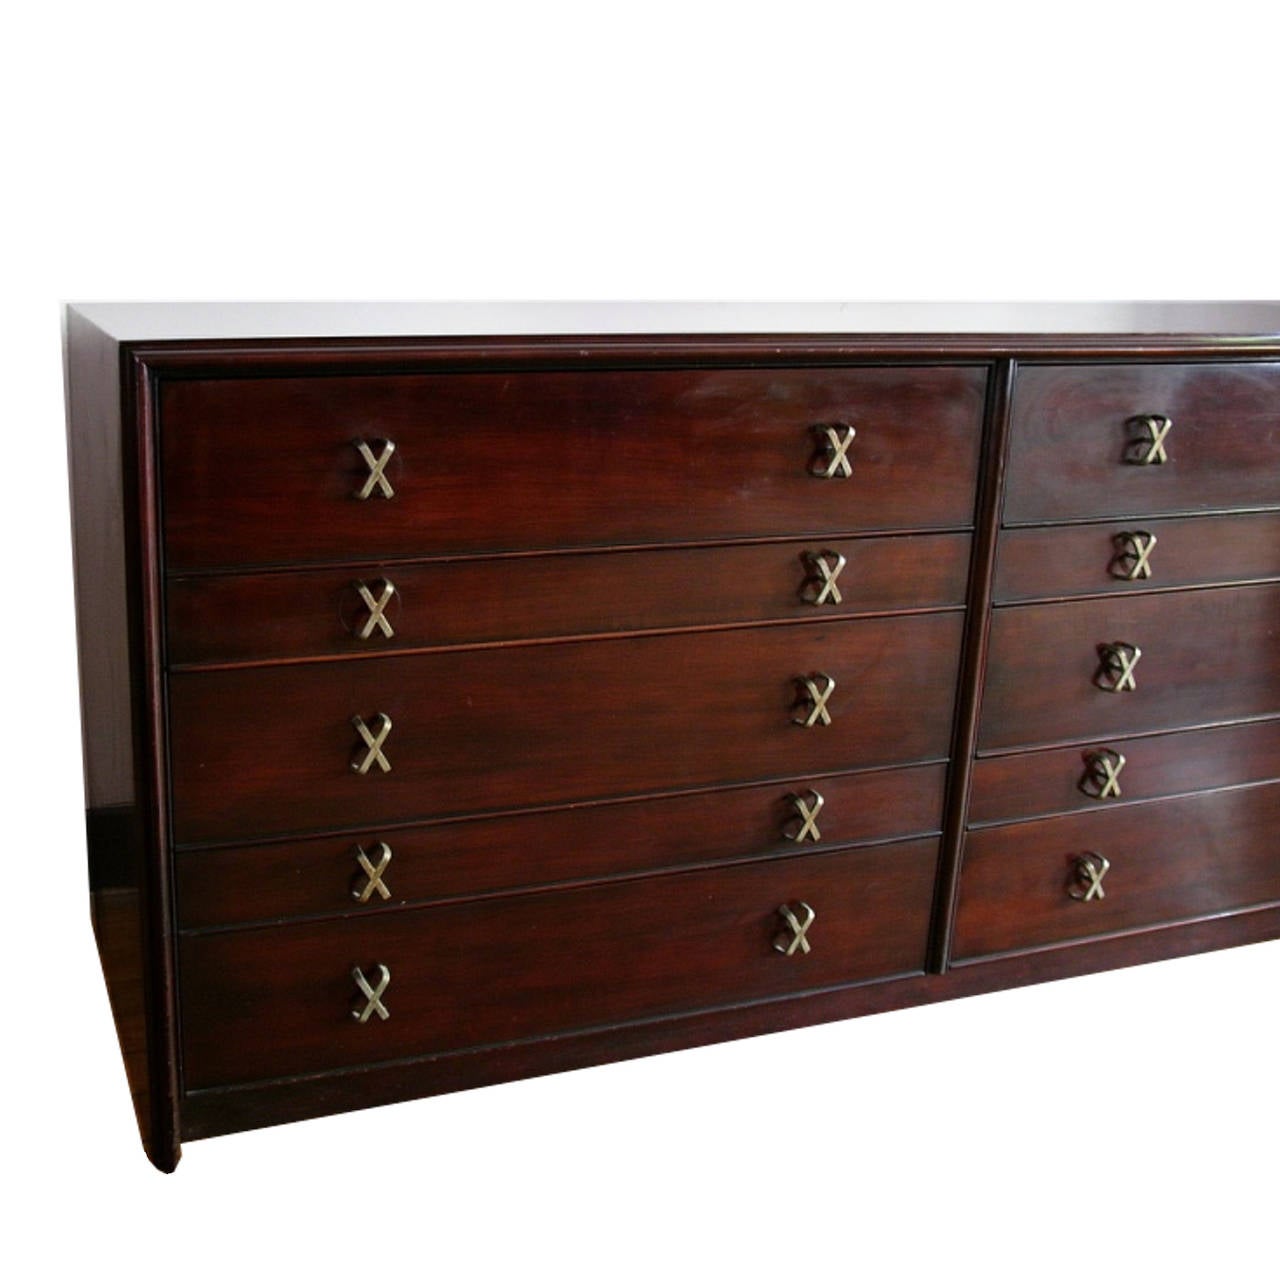 Beautiful all original dresser with brass X-pulls.